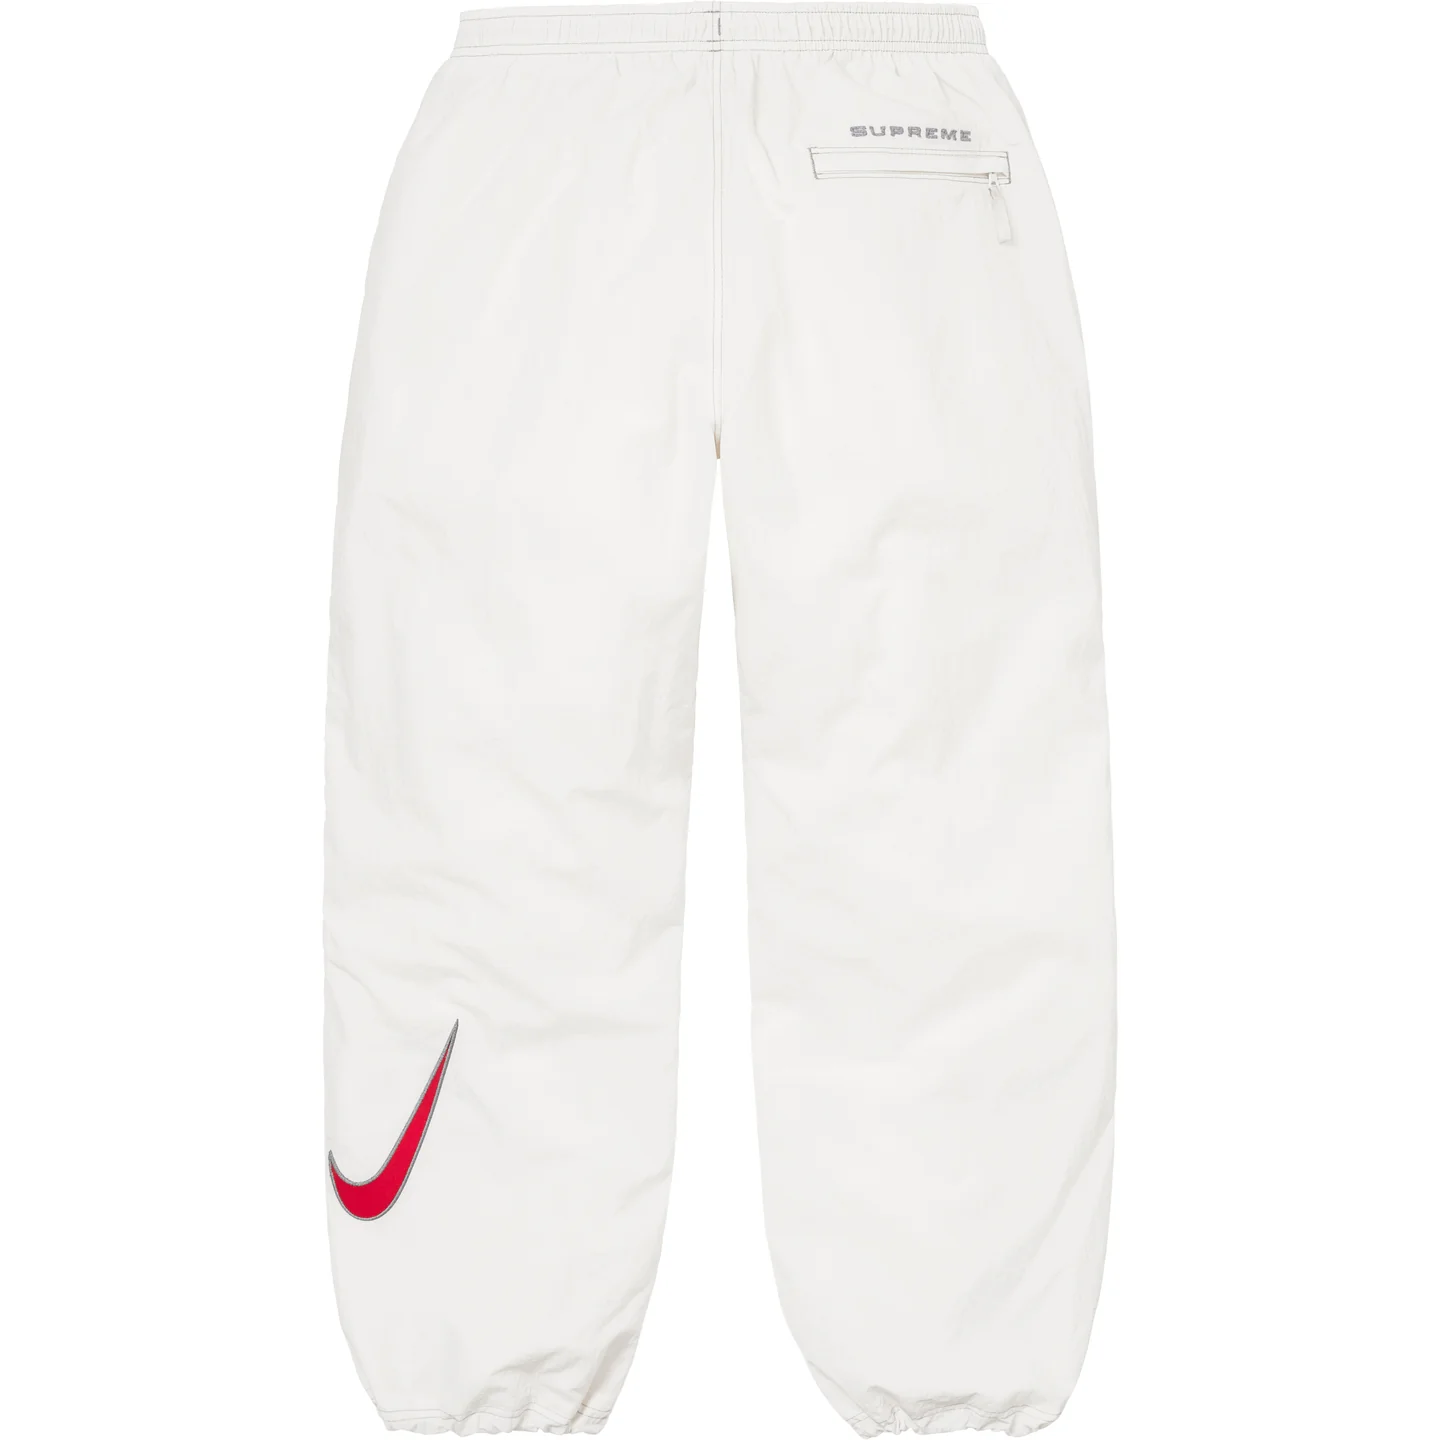 BaggyJeanSupreme / Nike Ripstop Track Pant White